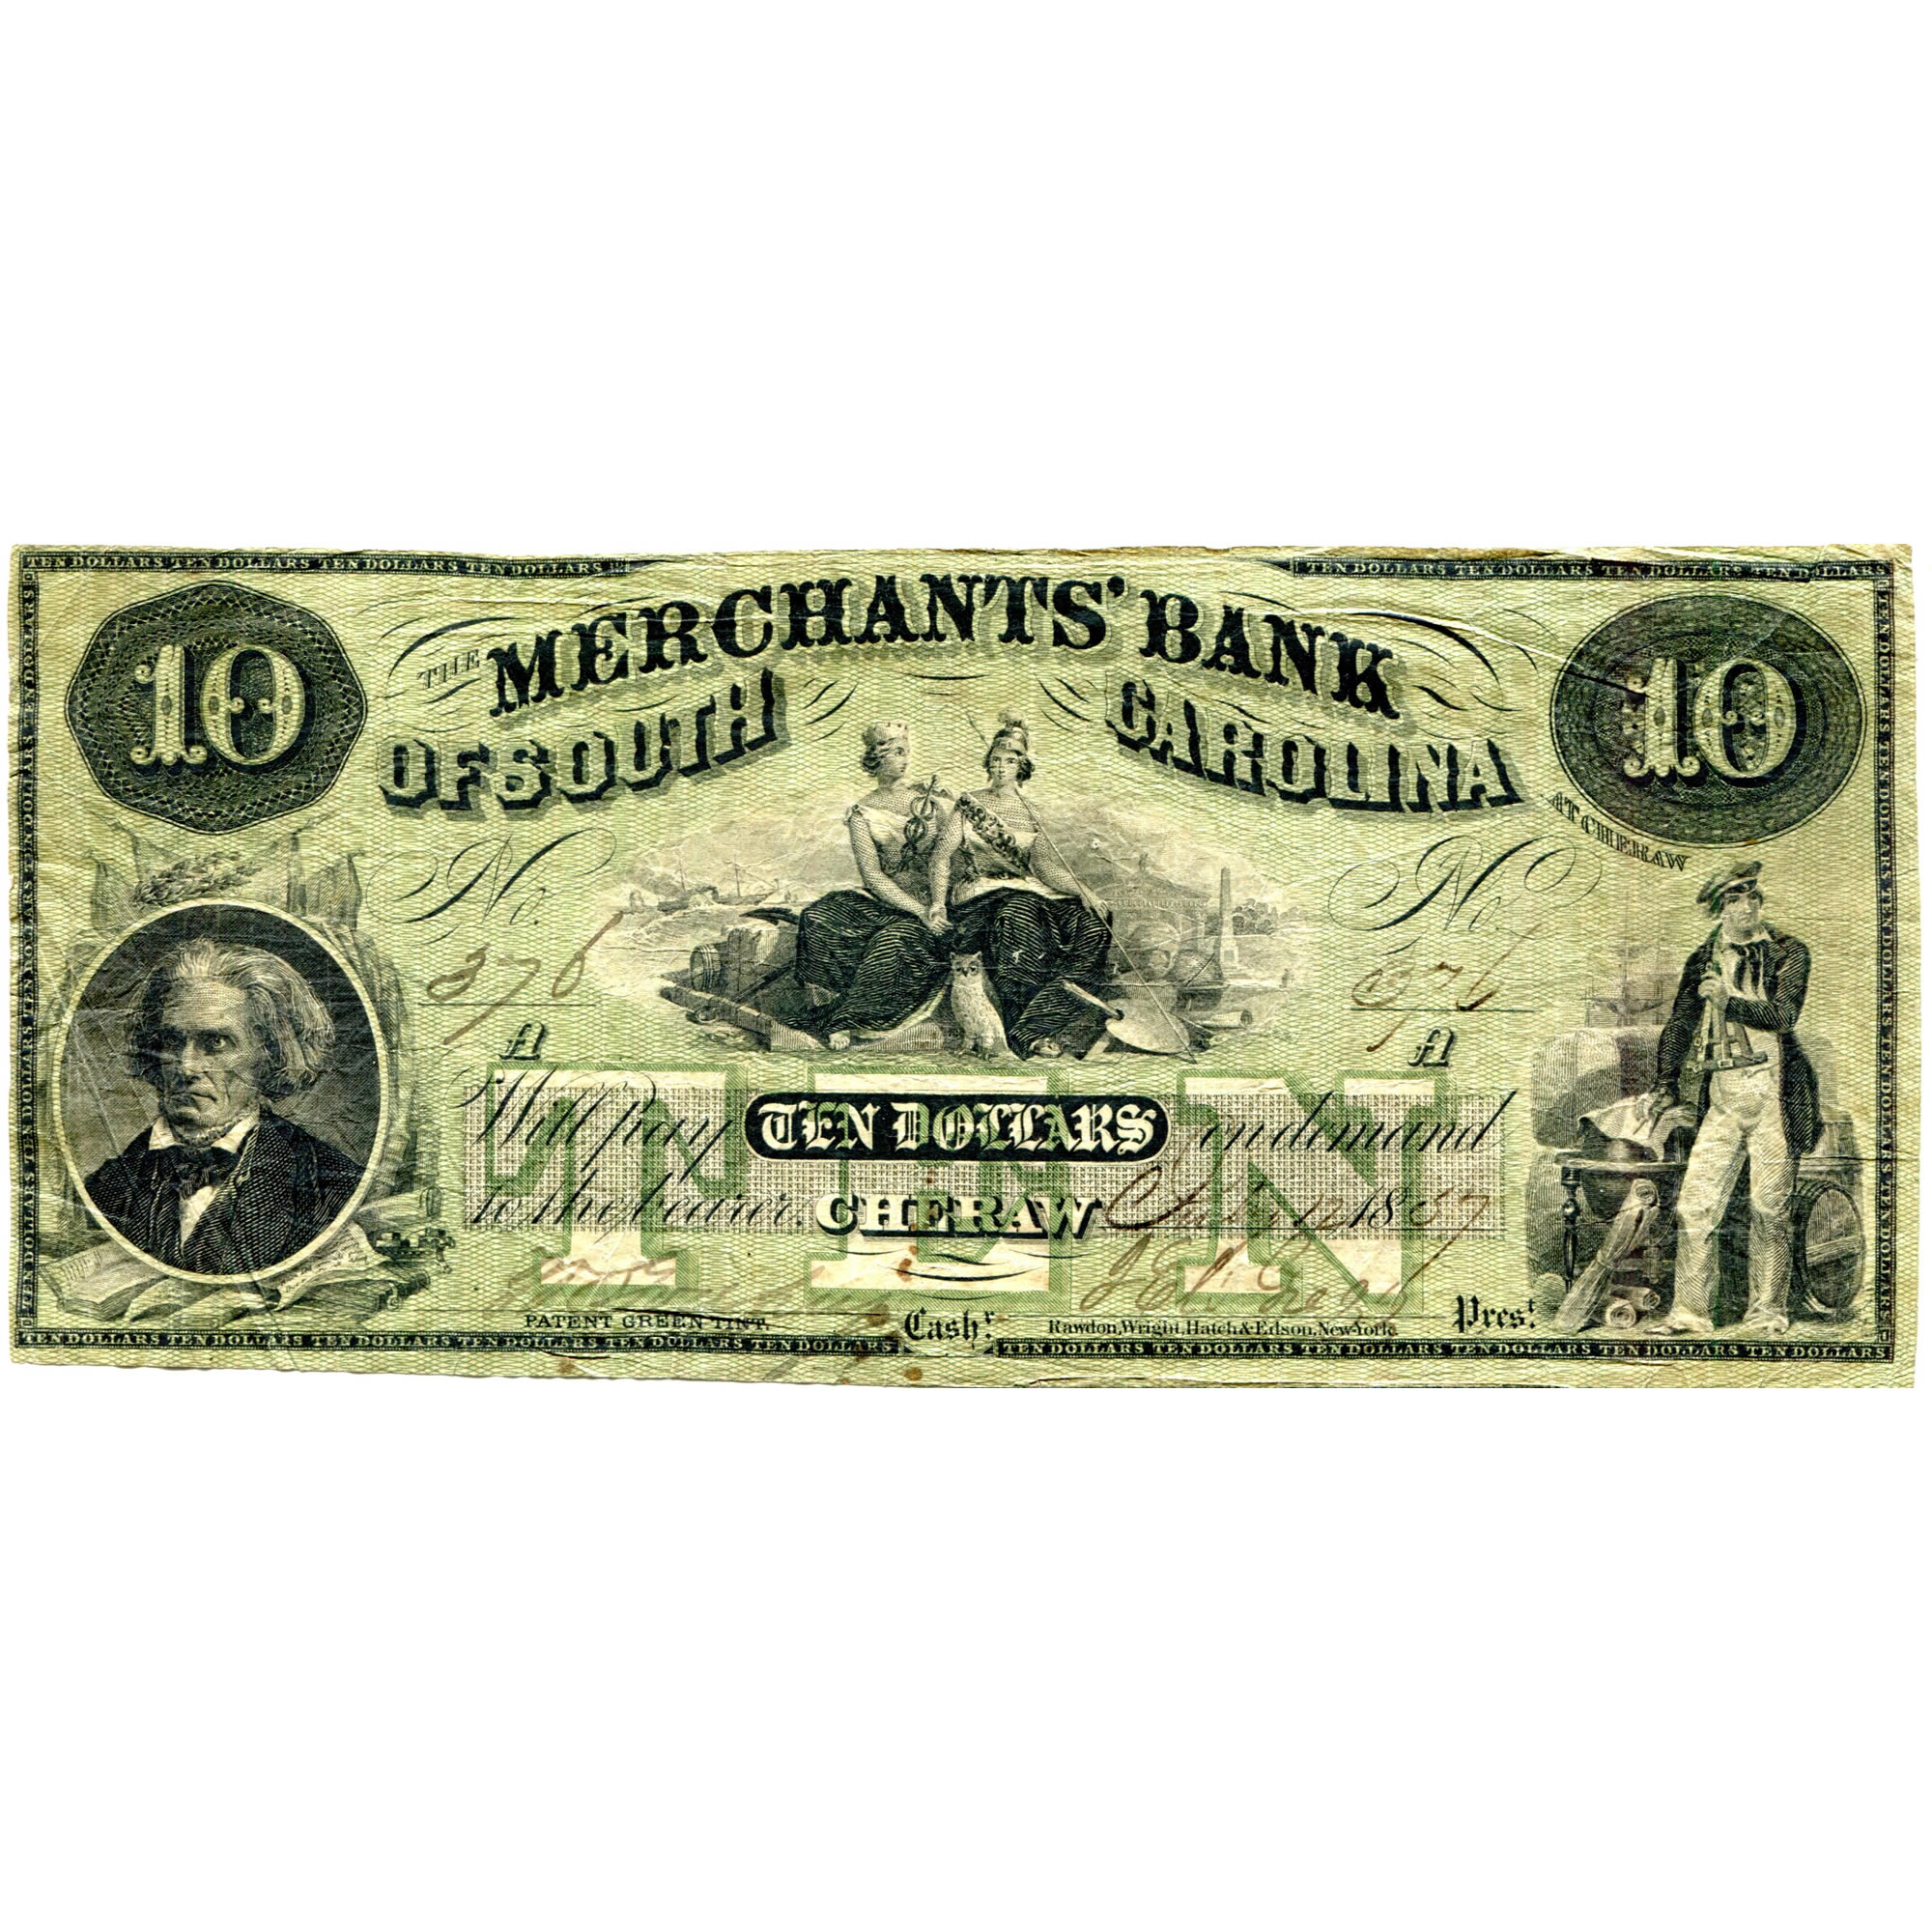 South Carolina Cheraw 1857 $10 Merchants Bank of South Carolina SC-60 G12a VF